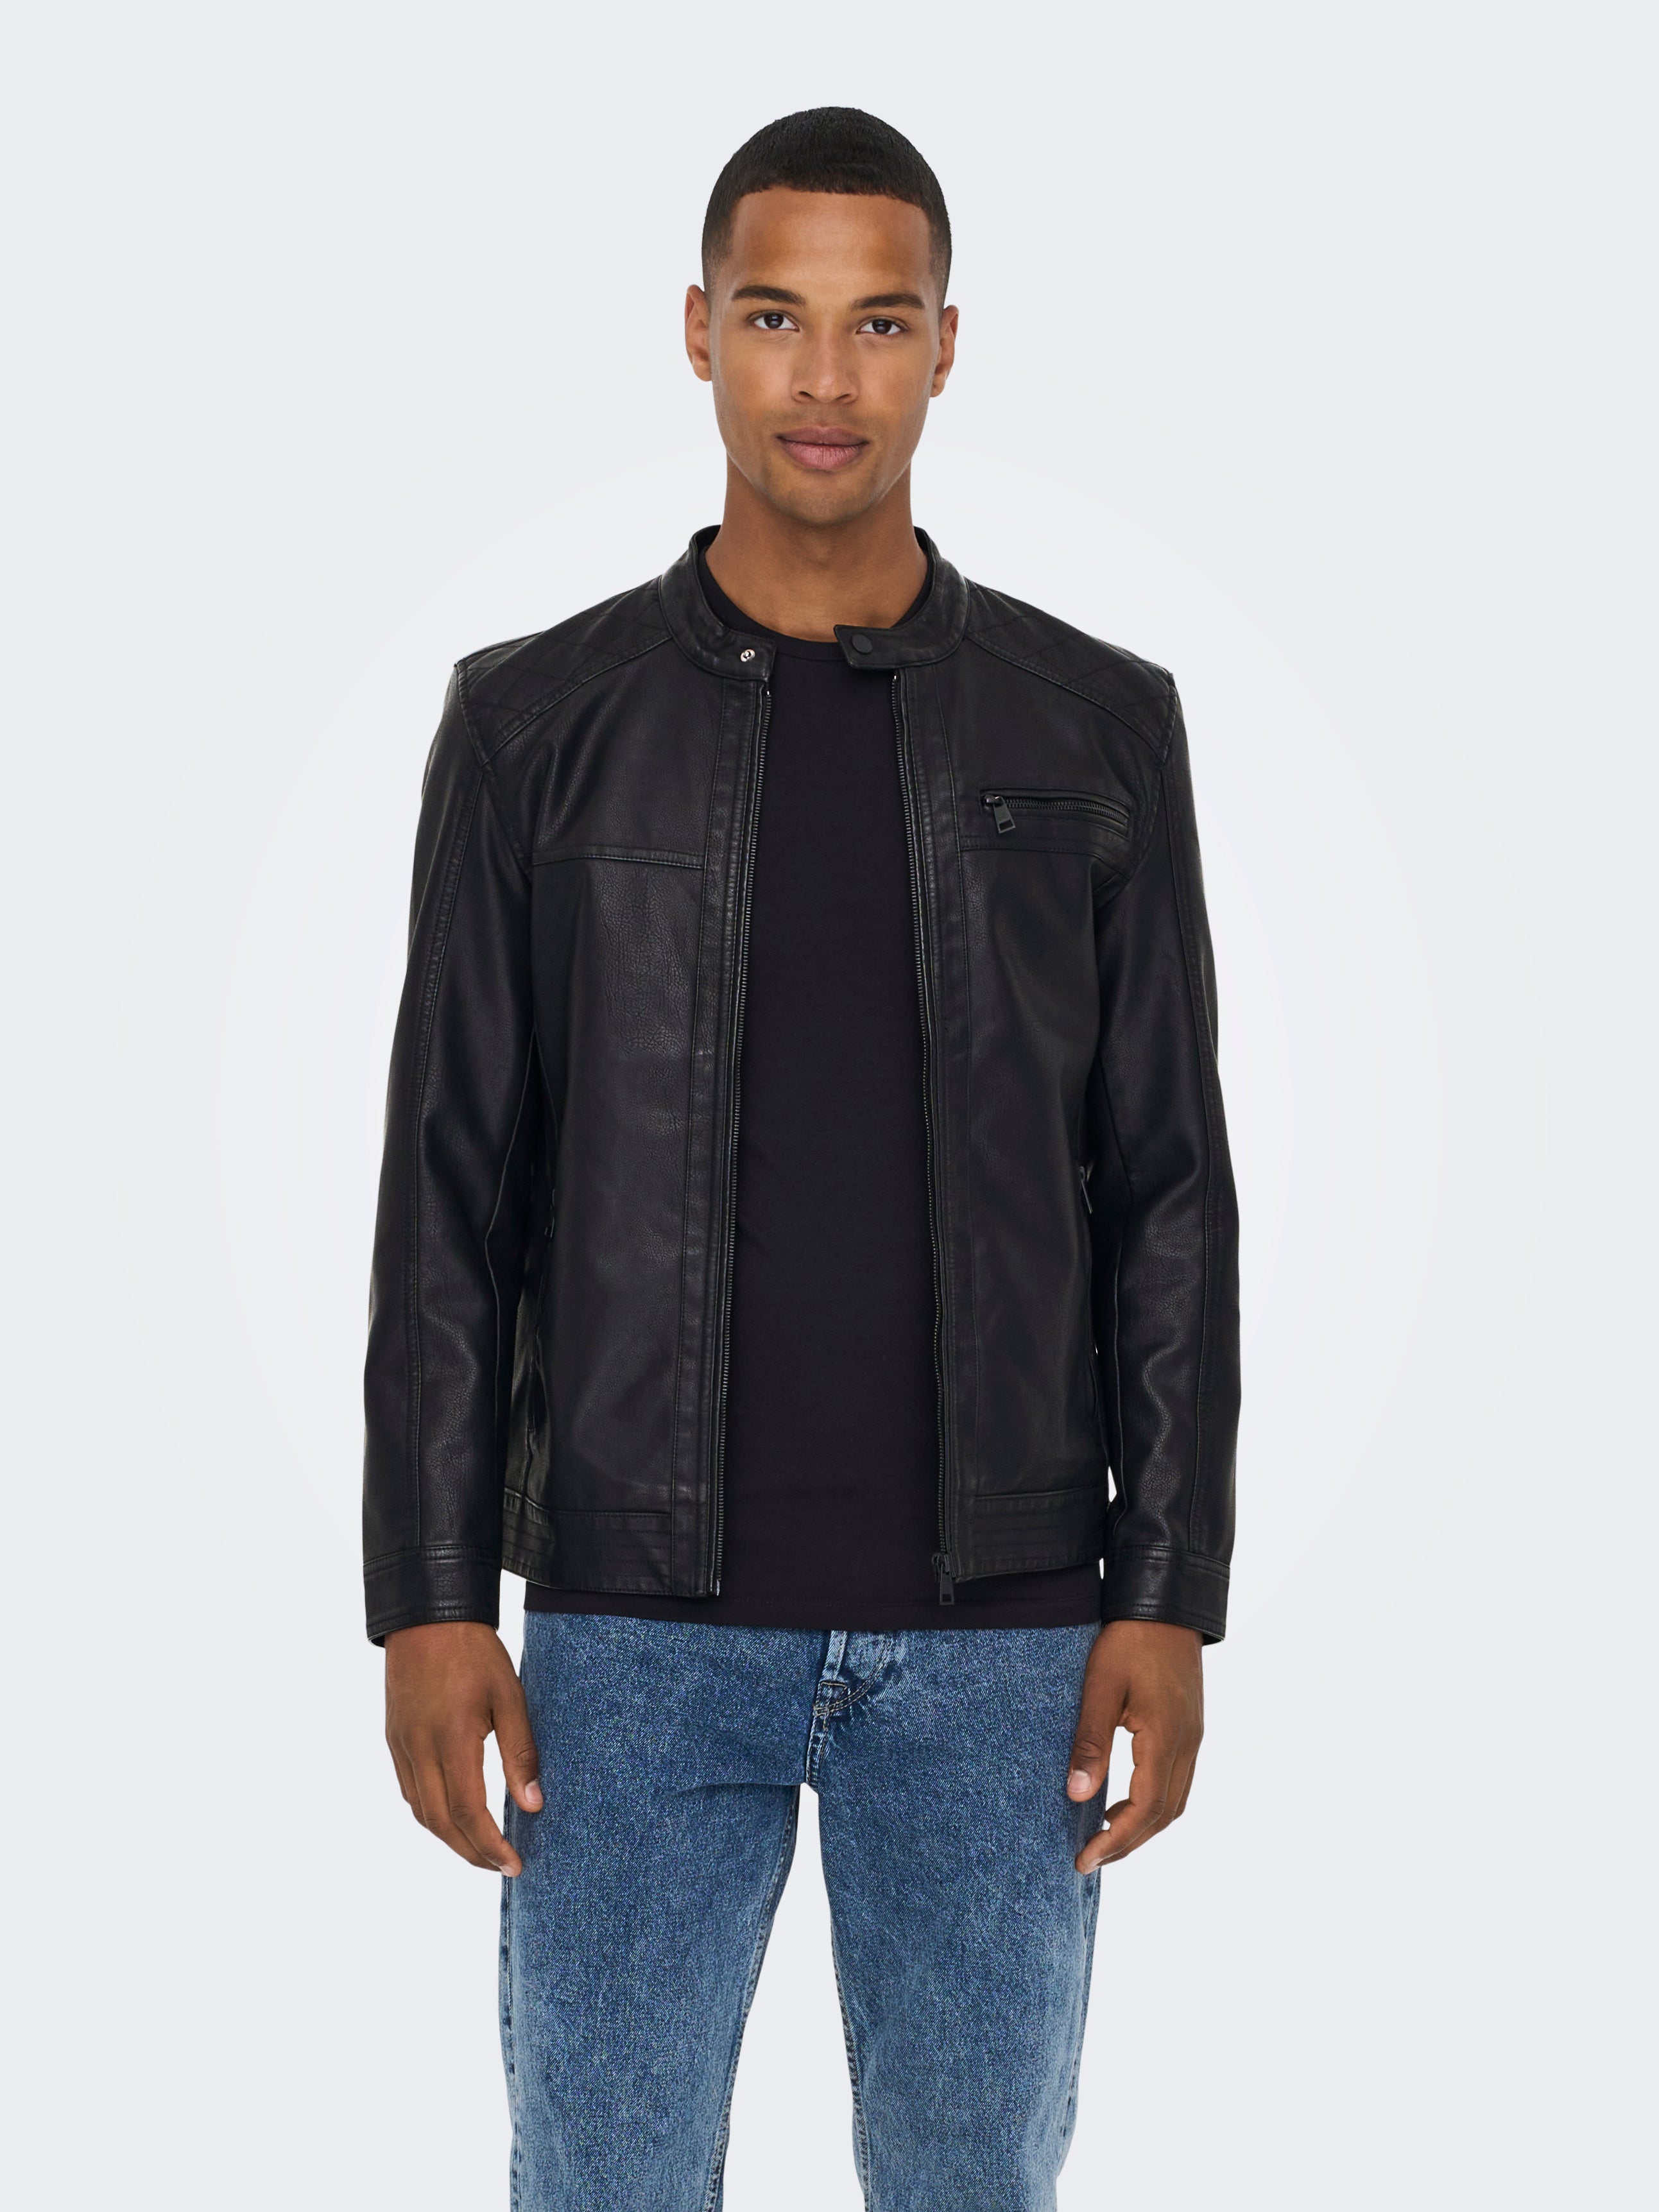 Black L ONLY & SONS vest MEN FASHION Jackets Casual discount 56% 